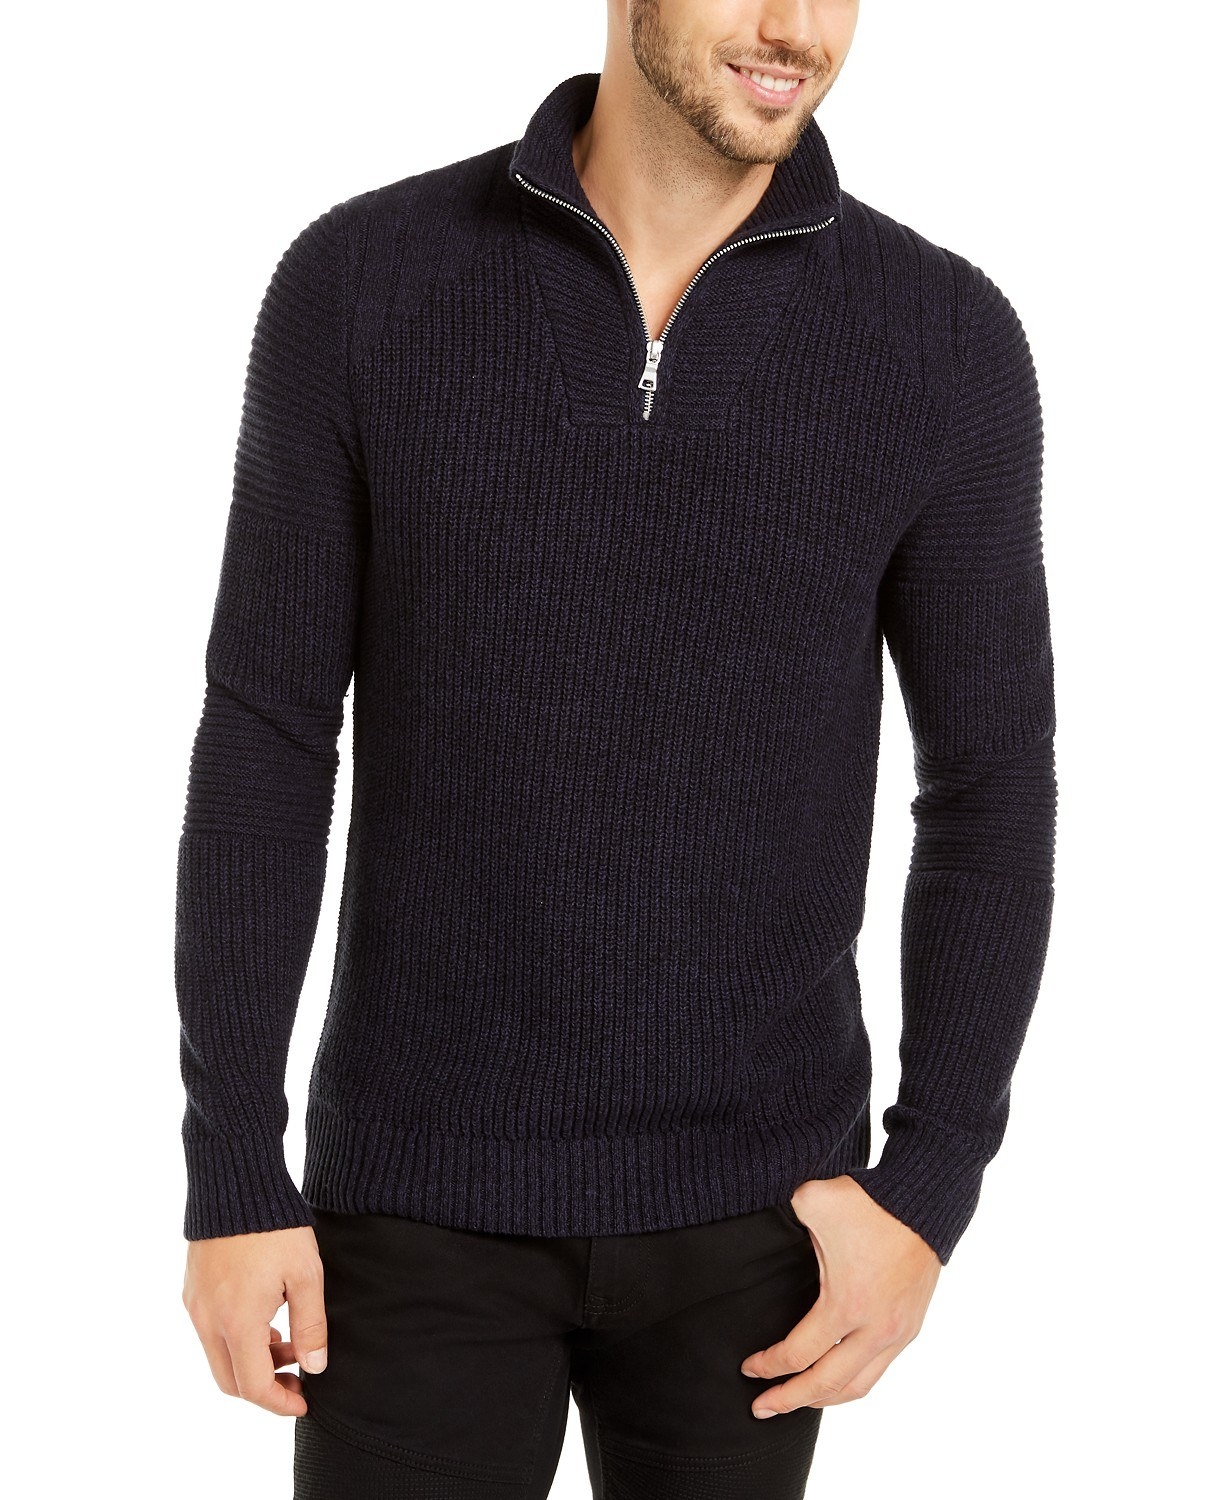 A model in a navy quarter zip sweater 